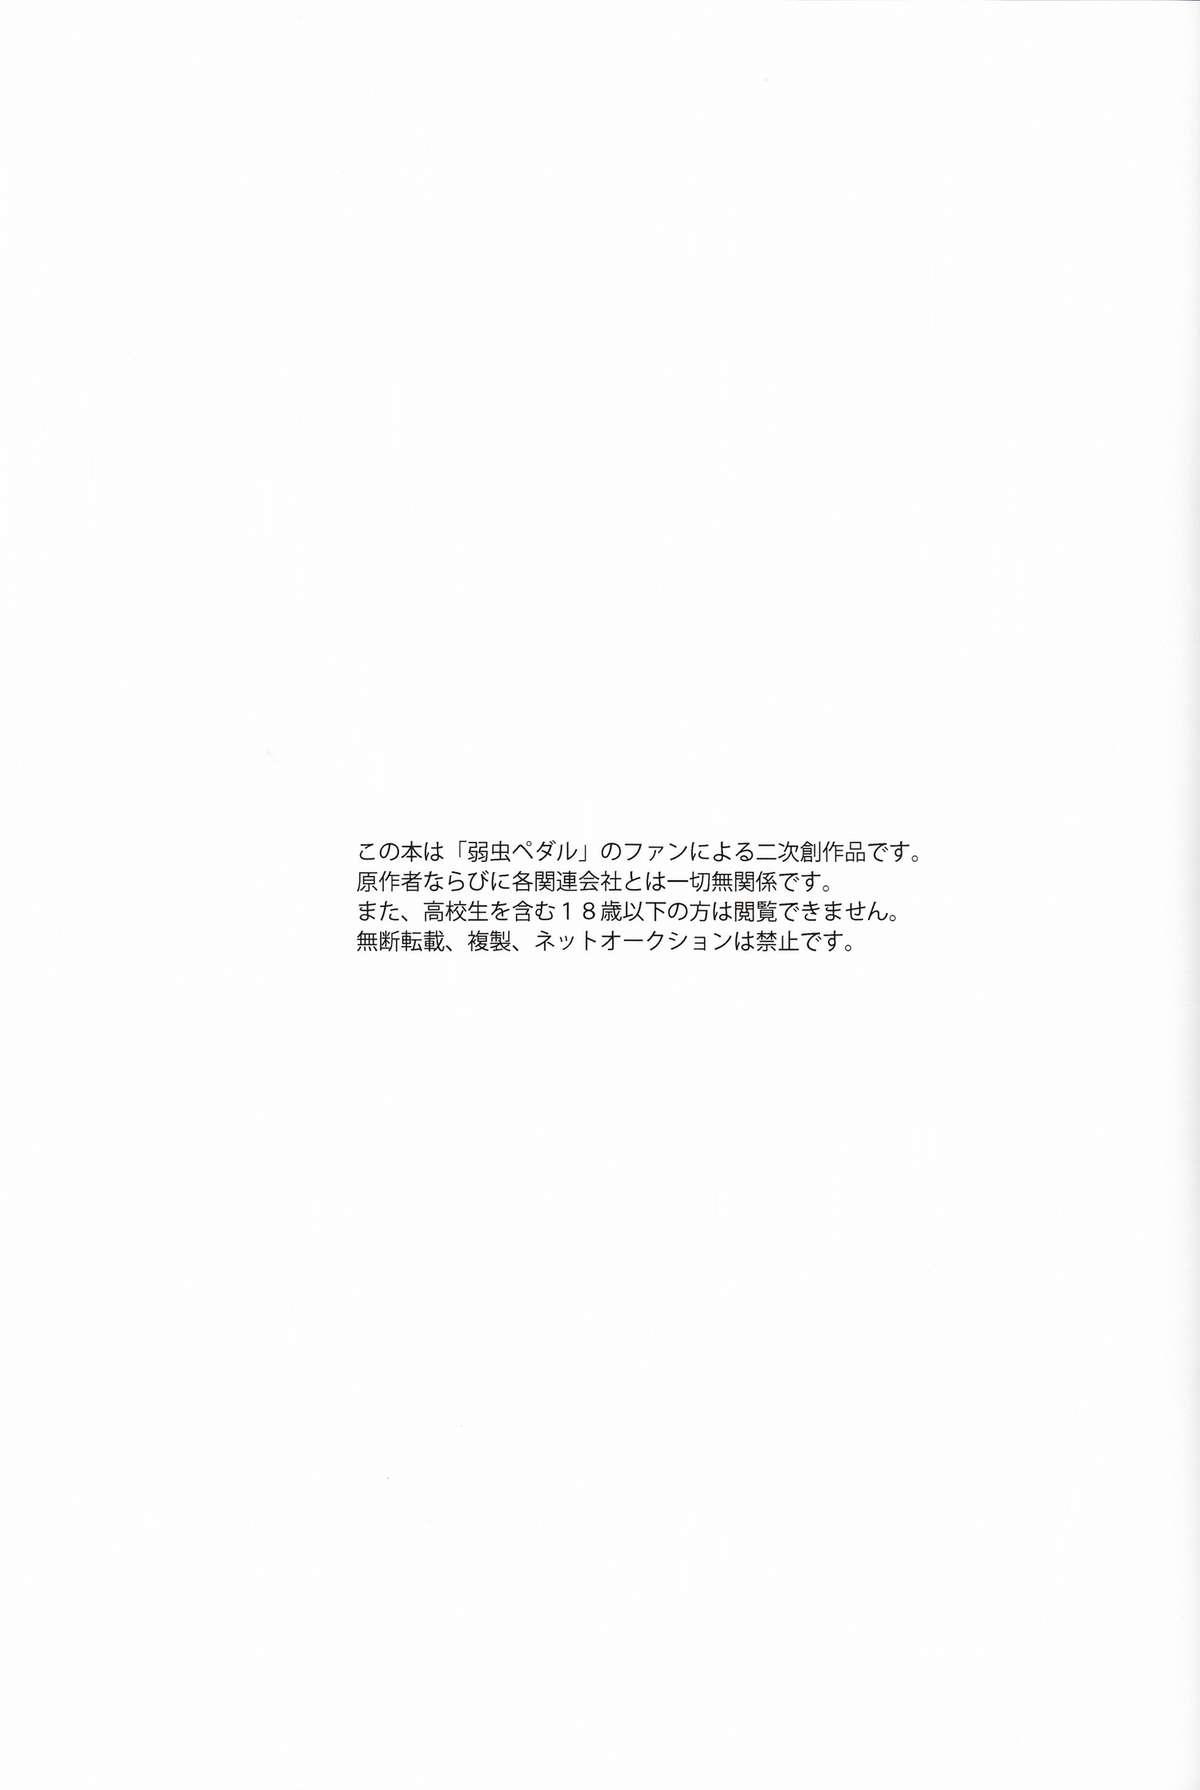 Lady Kare Ni Onetsu - Yowamushi pedal Leather - Page 3